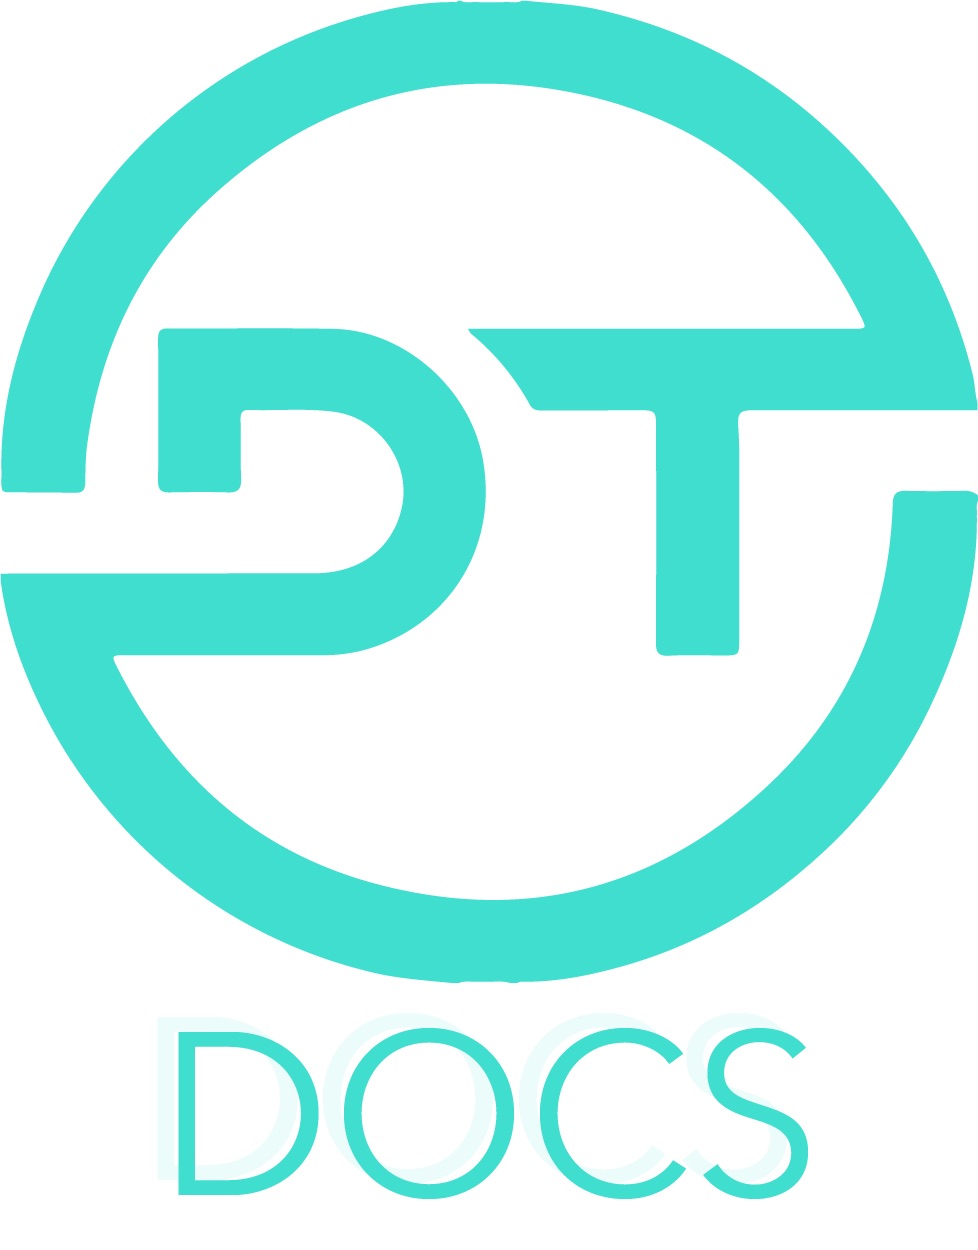 DT Docs Logo